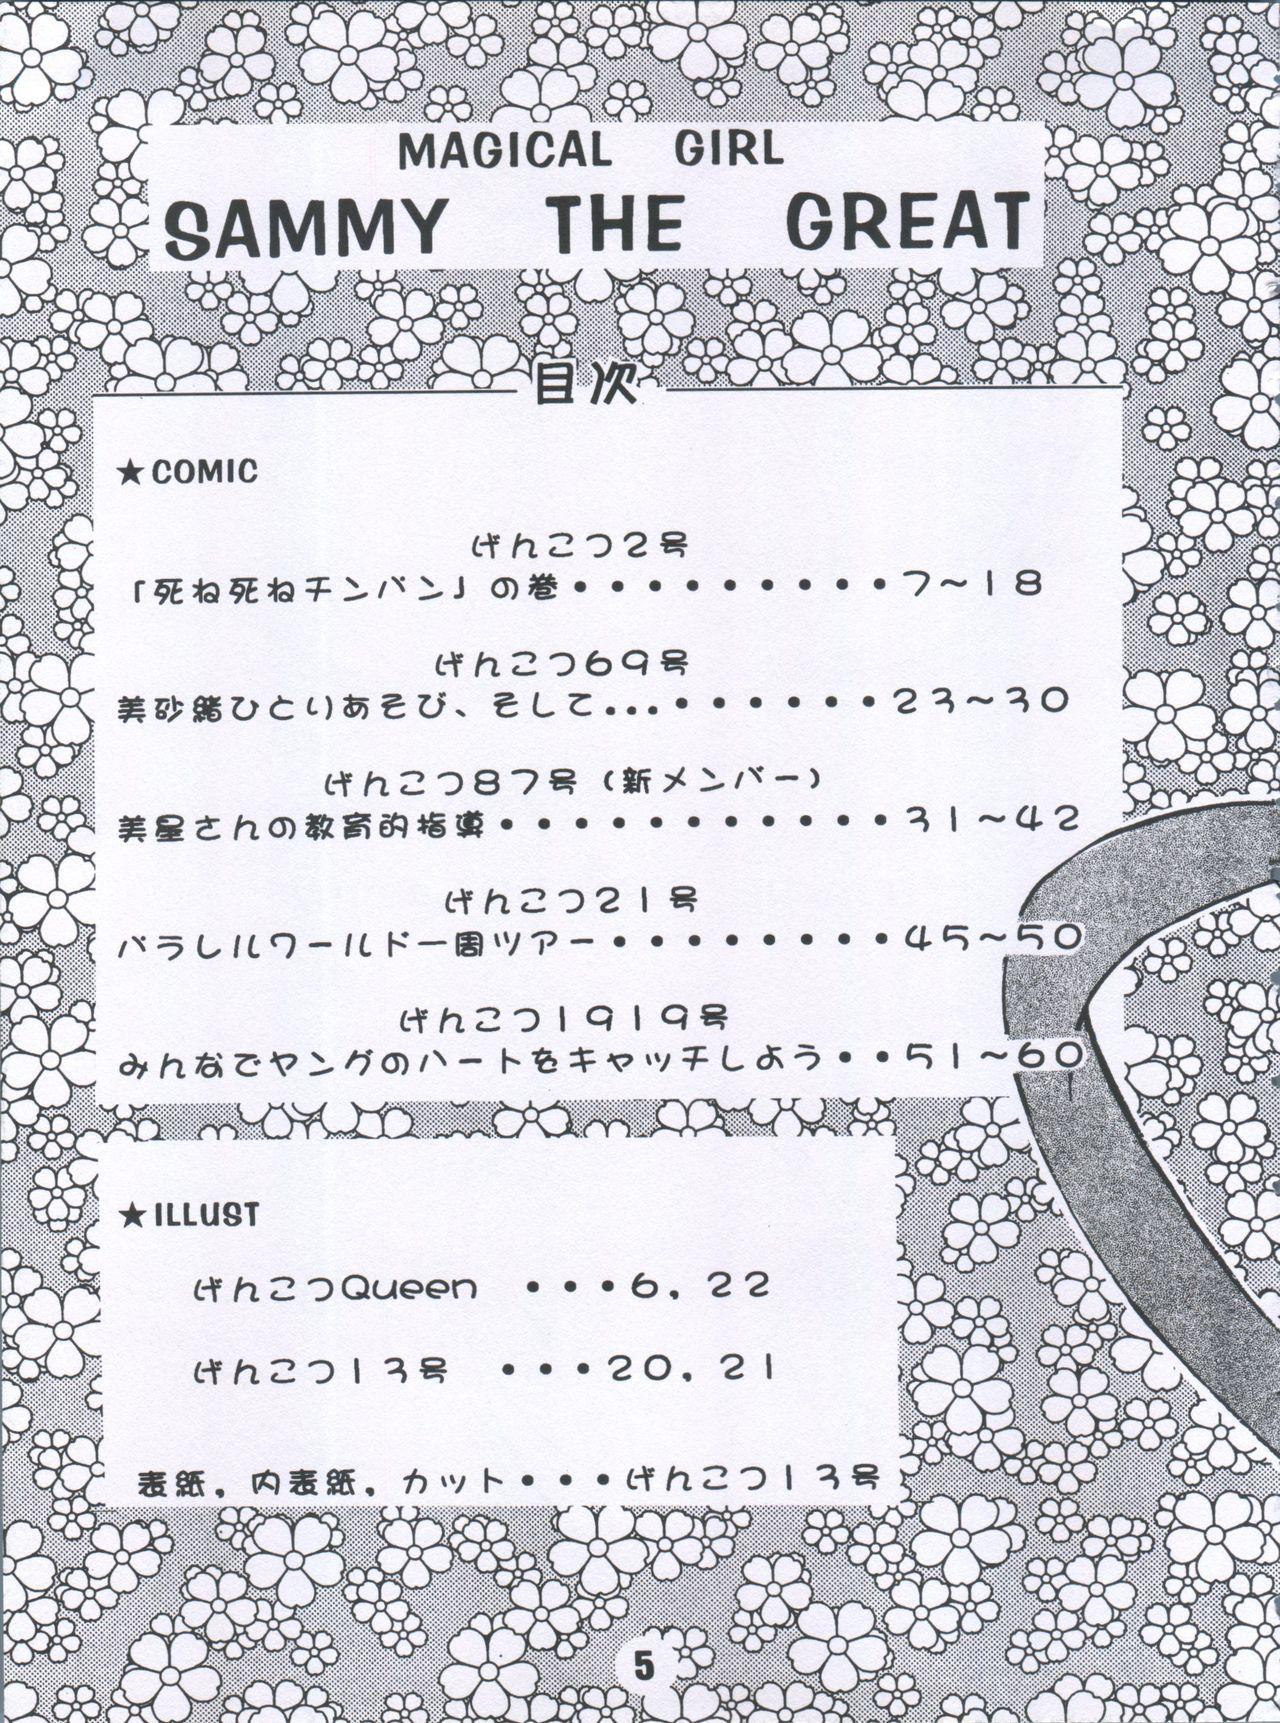 SAMMY THE★ GREAT 4